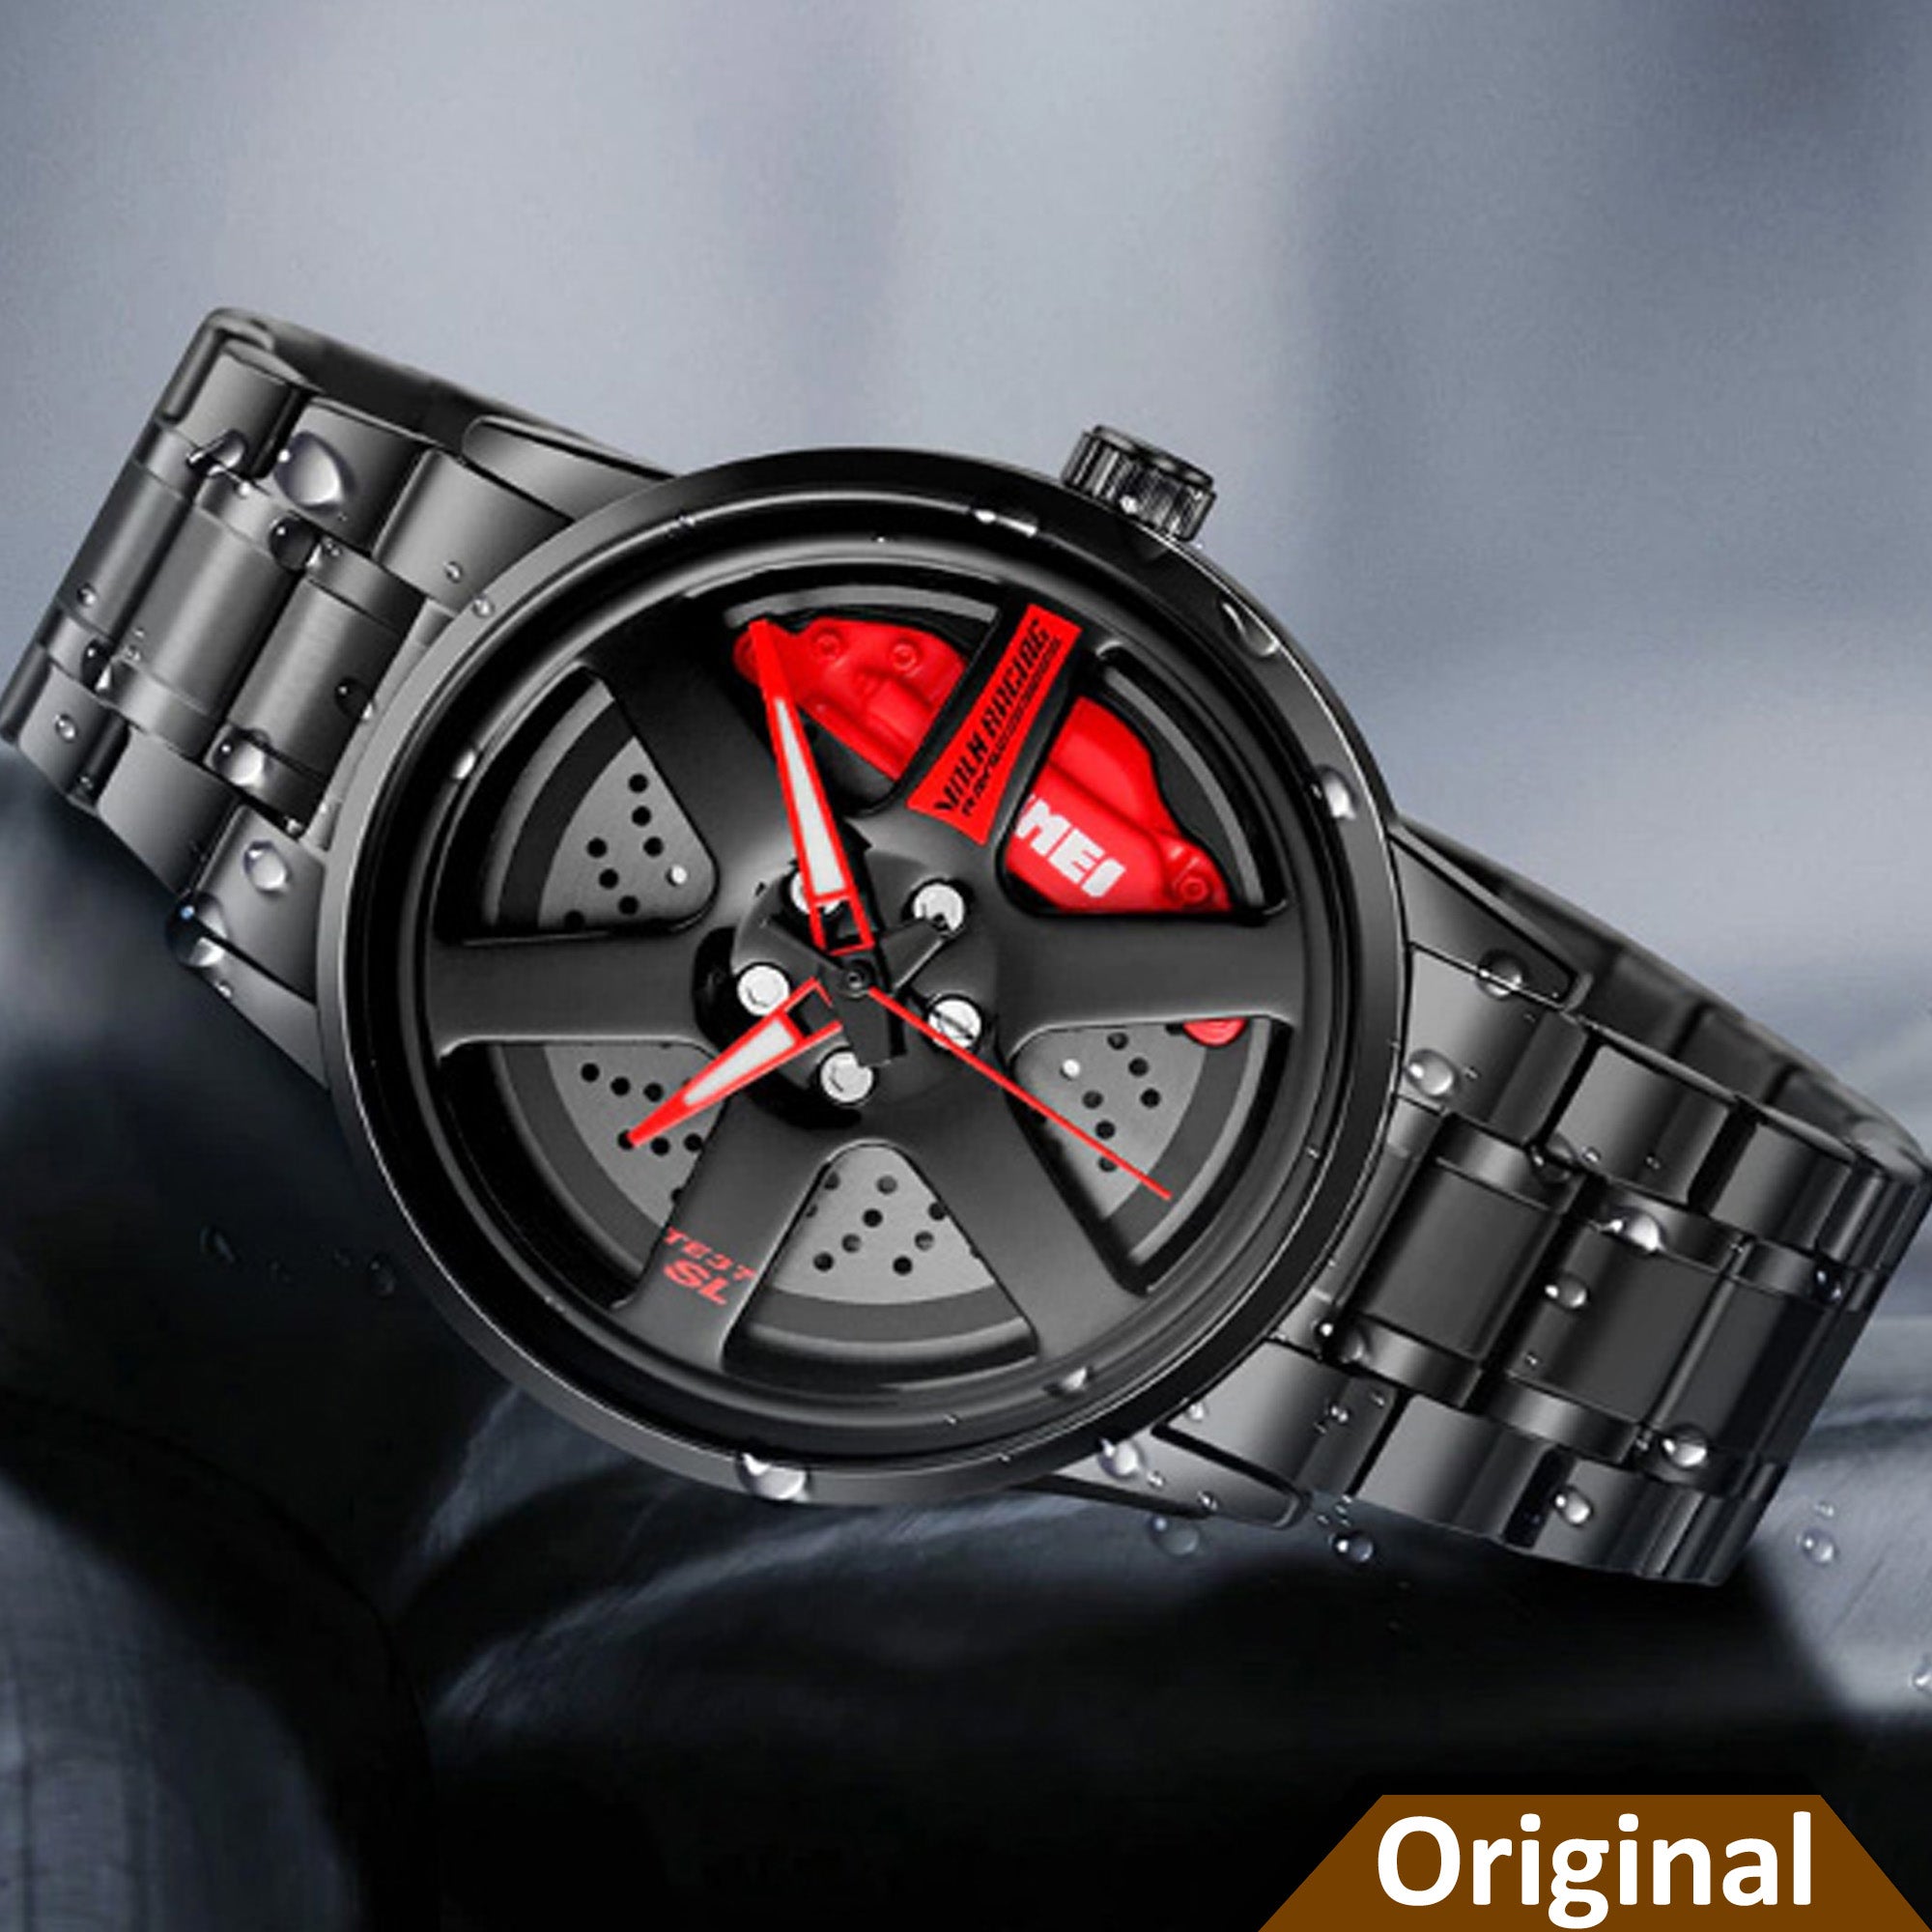 Analog Digital Skmei 1155 Watch(Red) Sports Watches